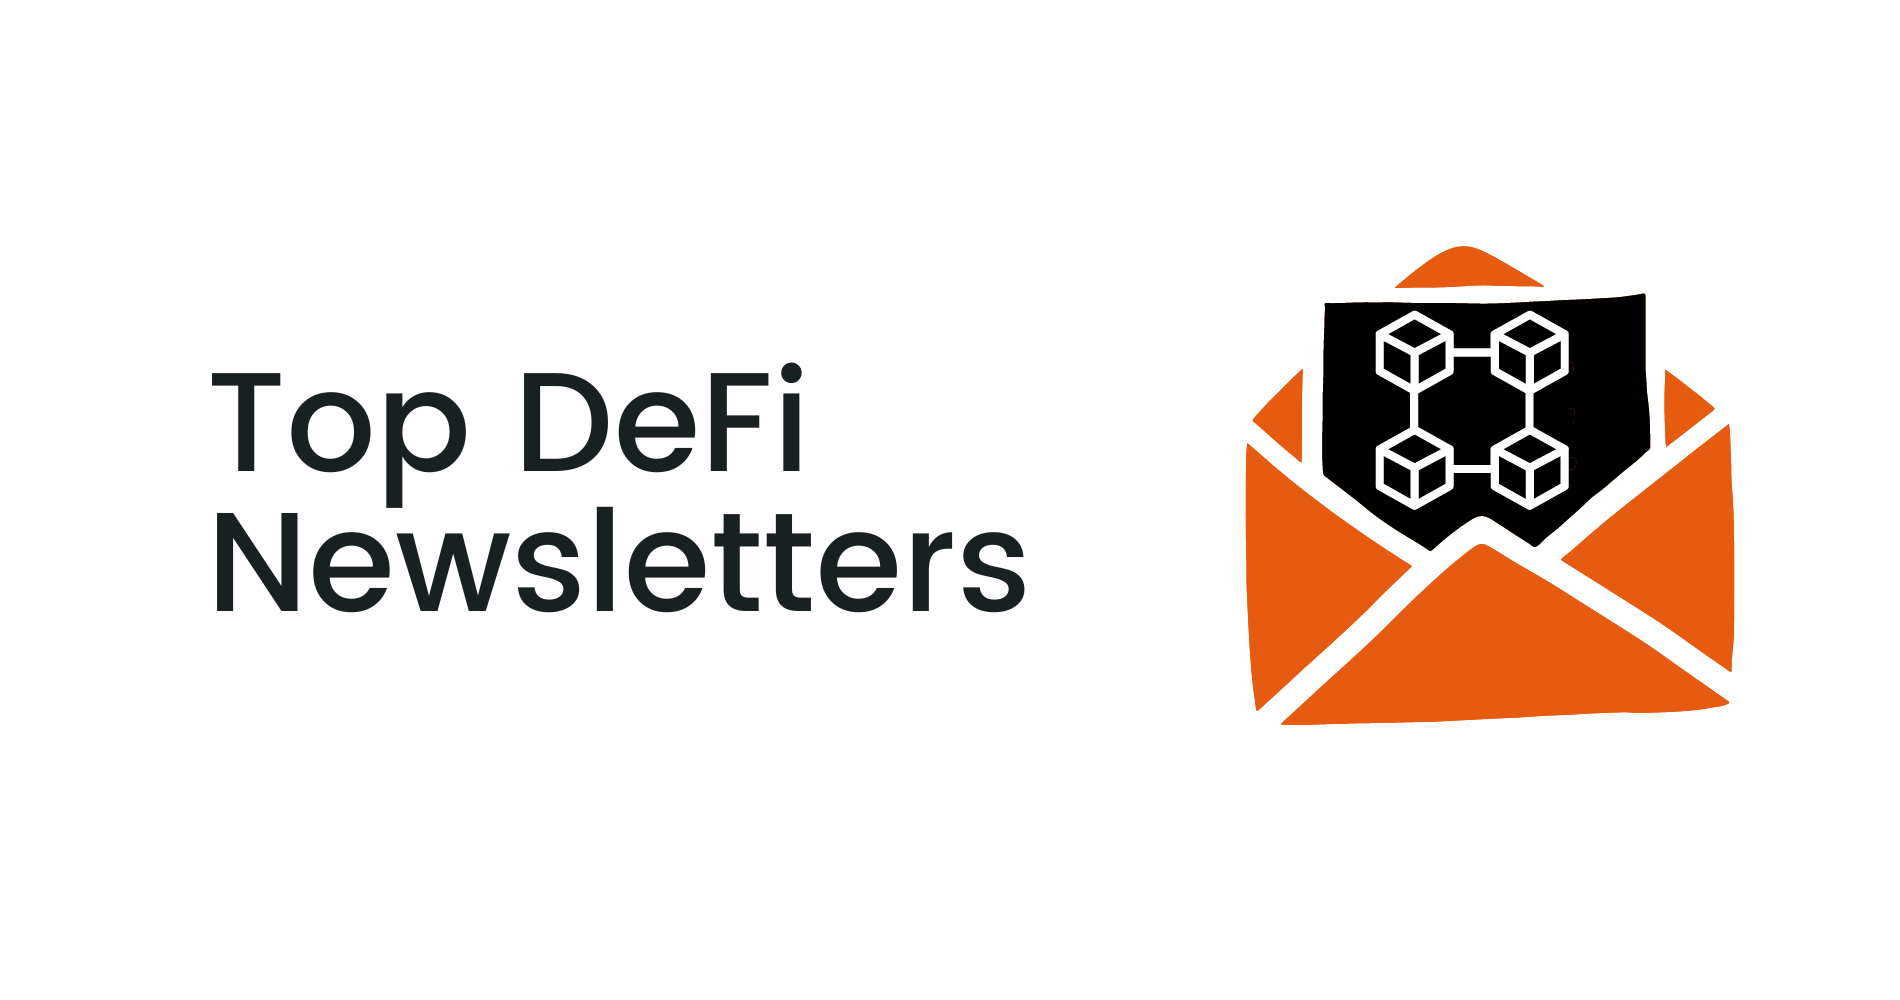 Top DeFi Newsletters